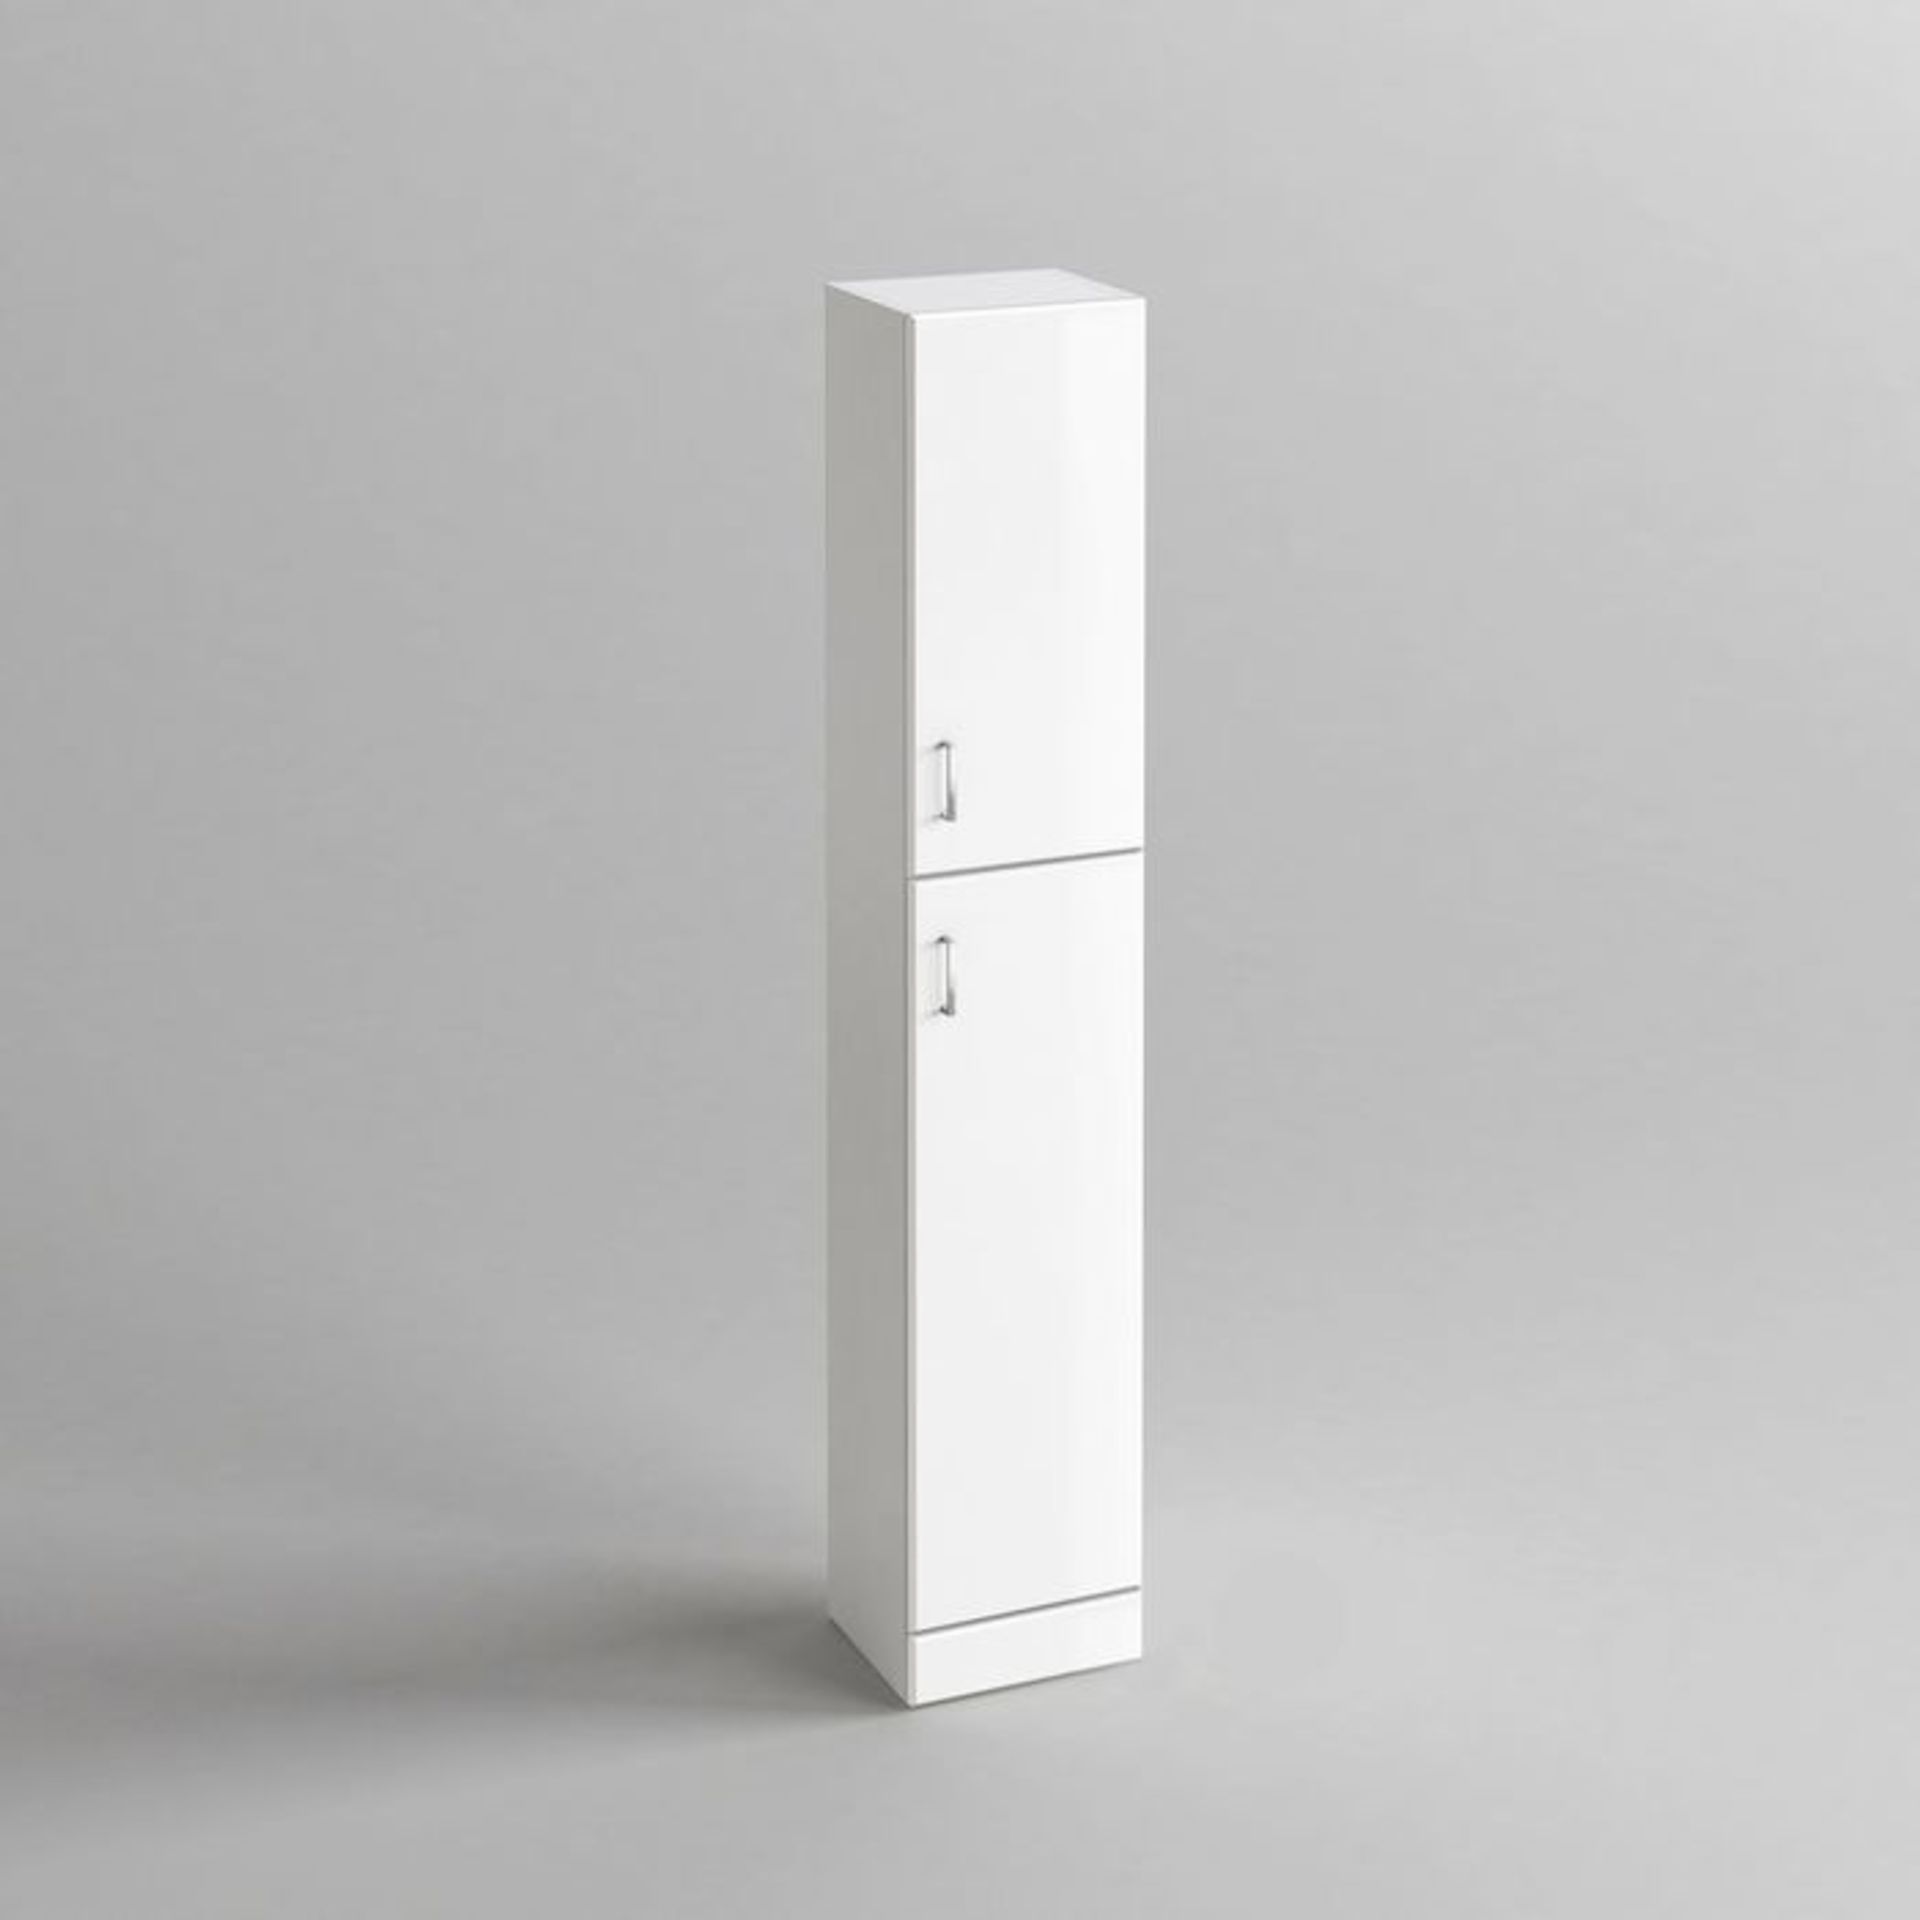 (H221) 1900x300mm Quartz Gloss White Tall Storage Cabinet - Floor Standing. RRP £251.99. Pristine - Image 4 of 5